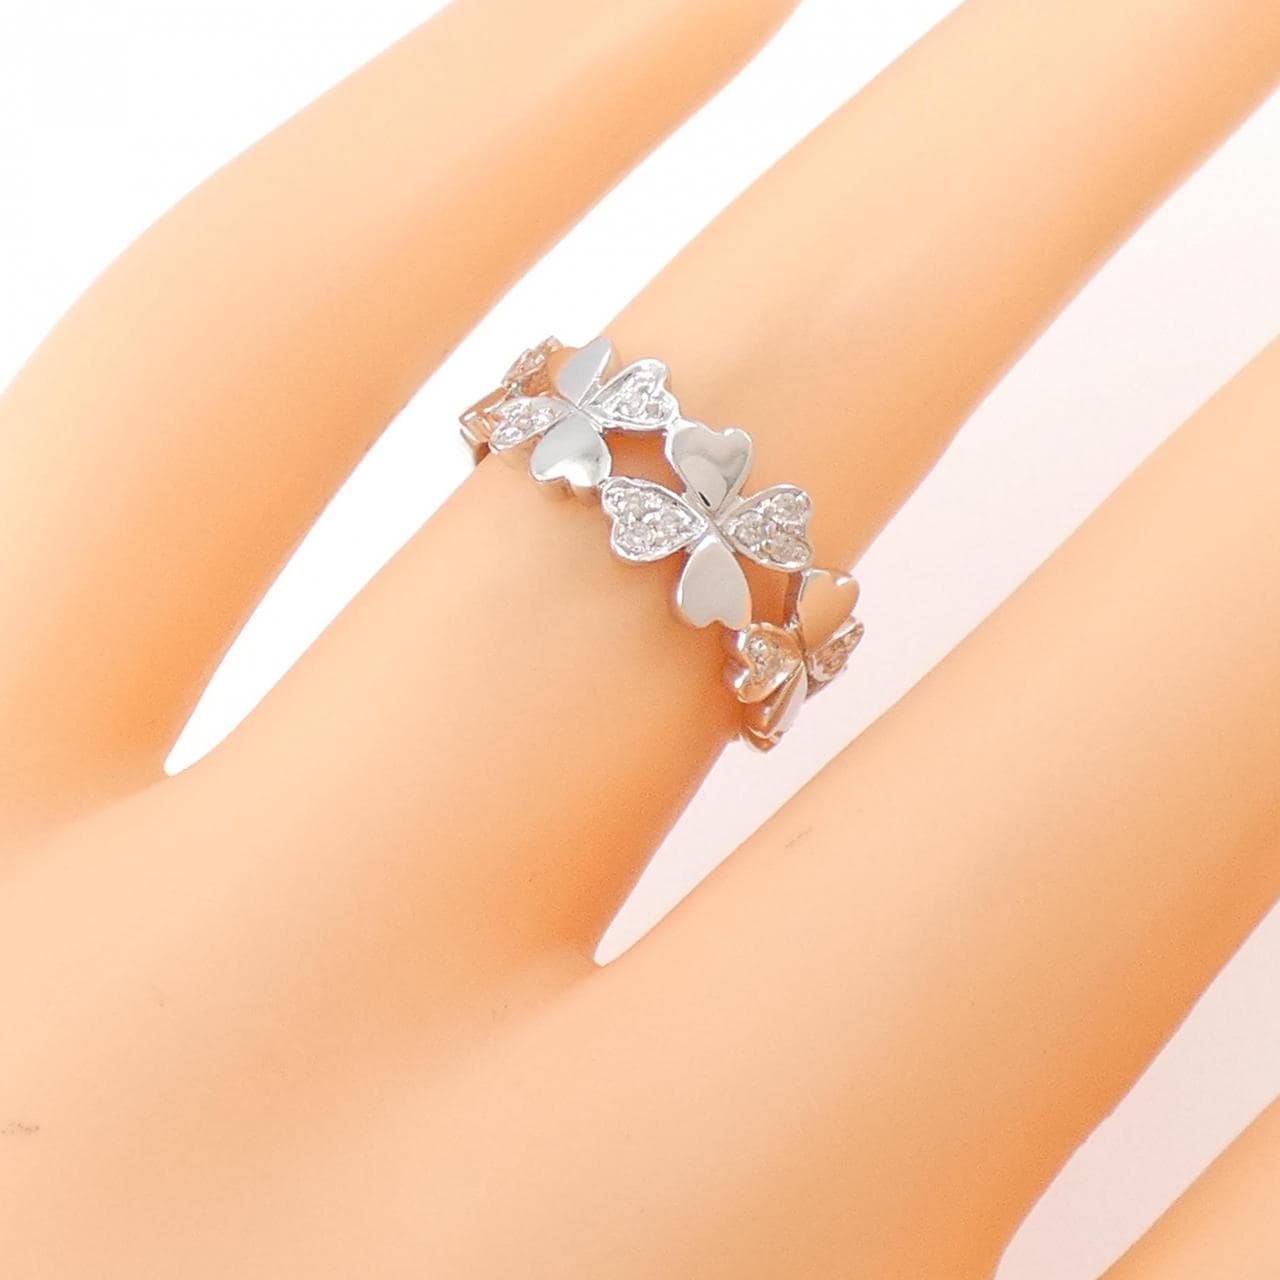 K18WG Clover Diamond Ring 0.09CT